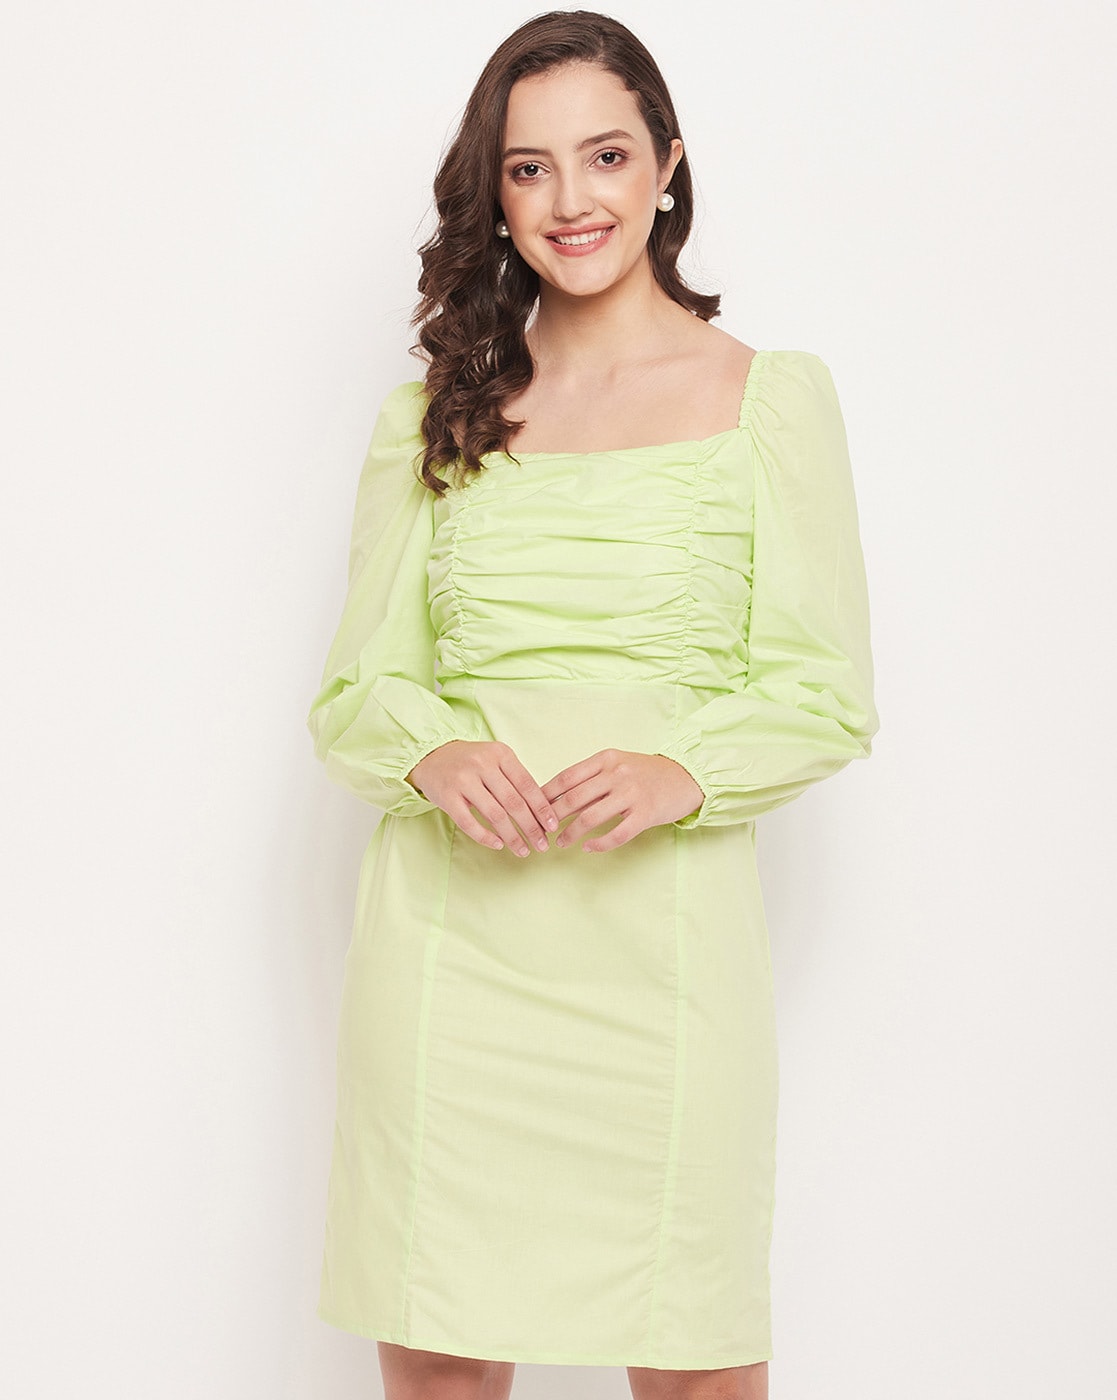 Buy Yellow Dresses & Frocks for Girls by R K MANIYAR Online | Ajio.com